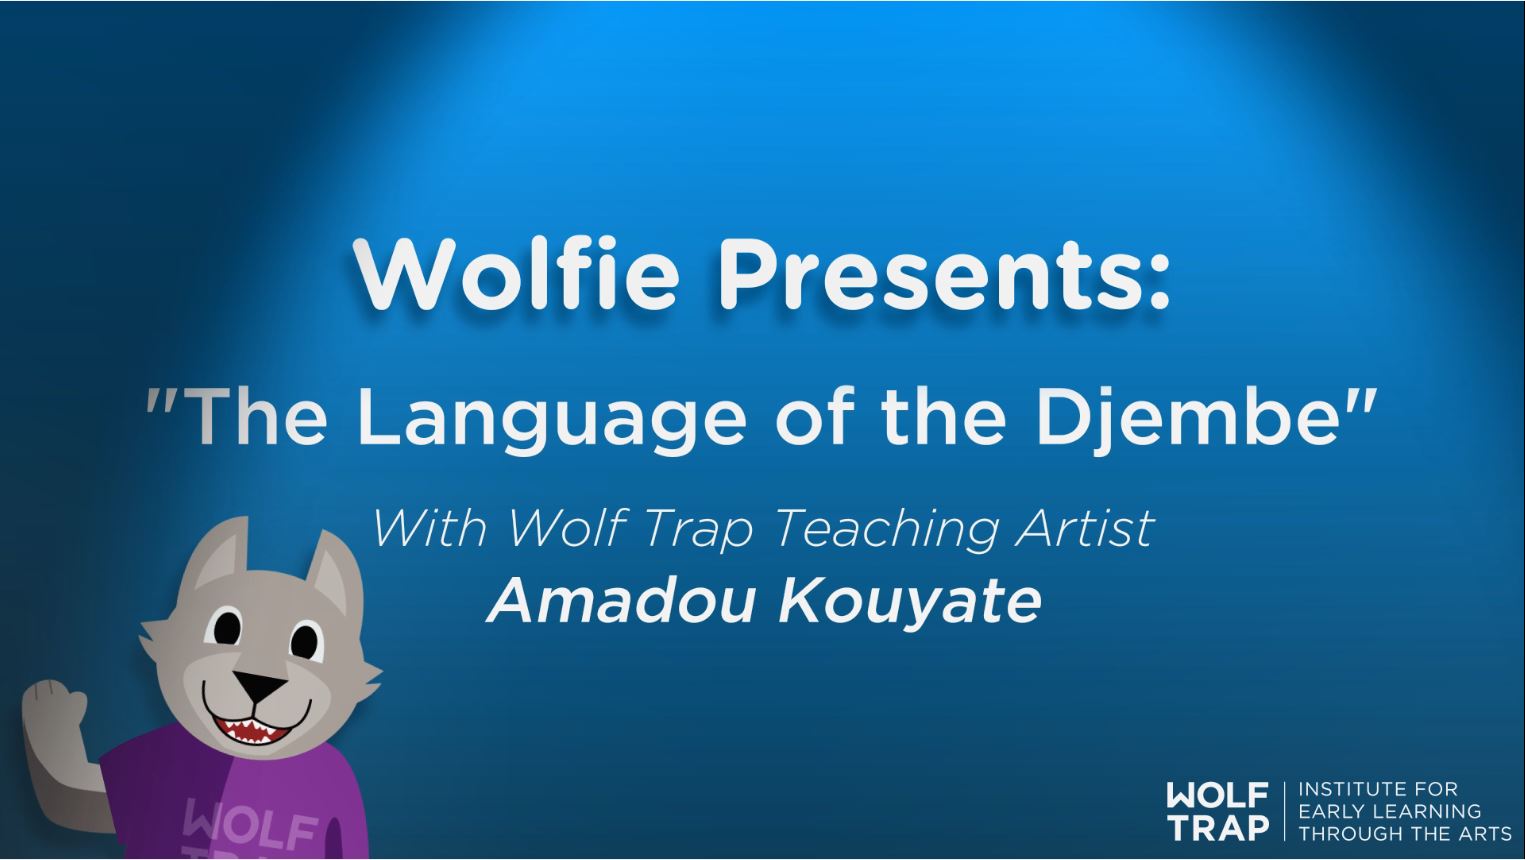 Wolfie Presents Amadou Kouyate Capture